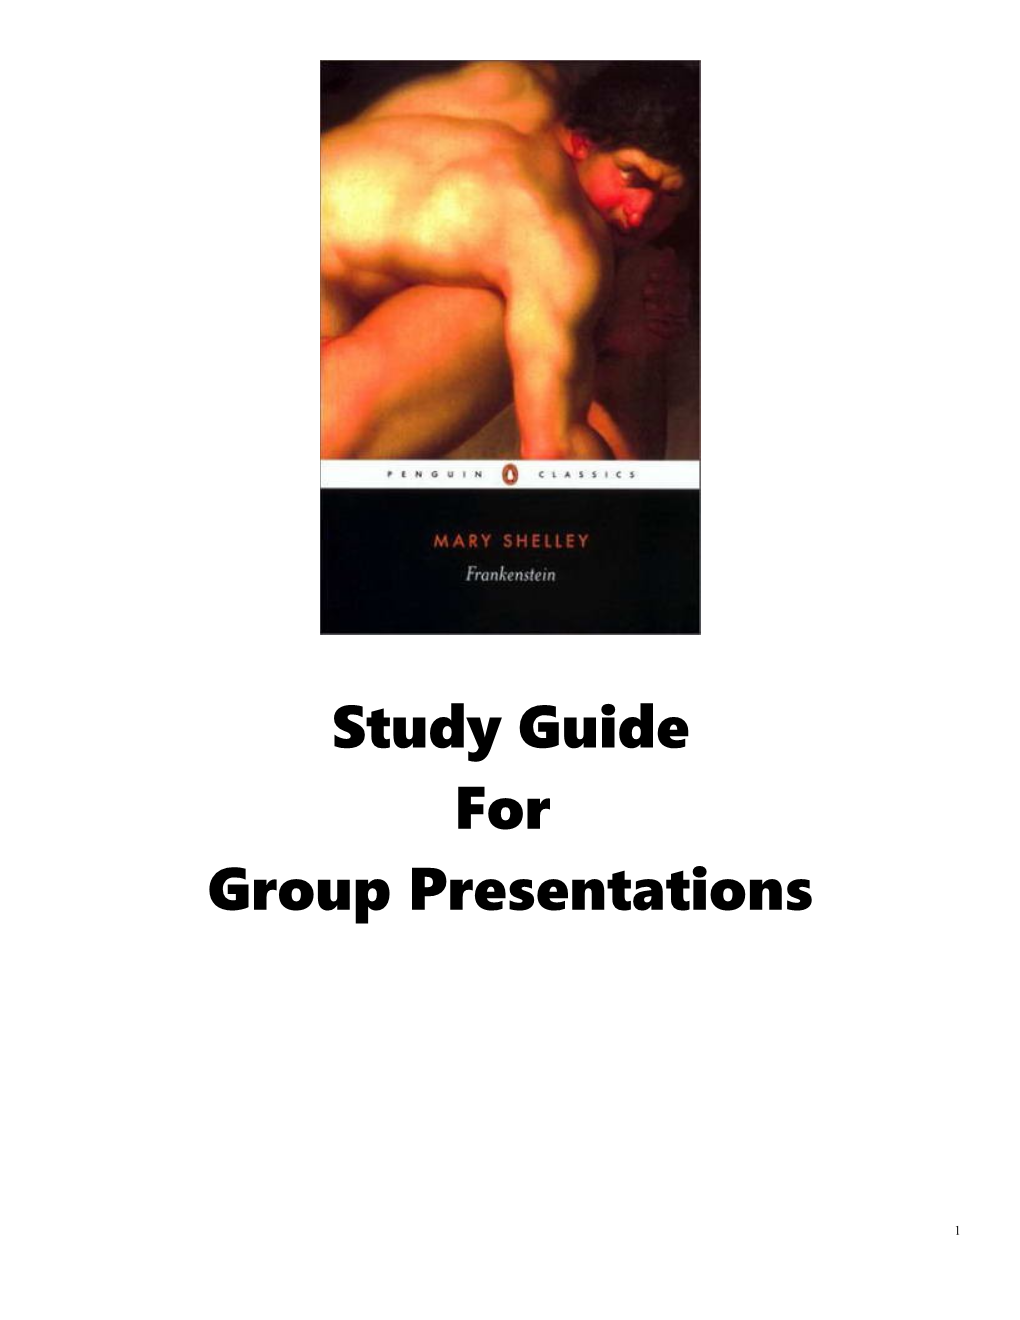 Frankenstein the Study Guide